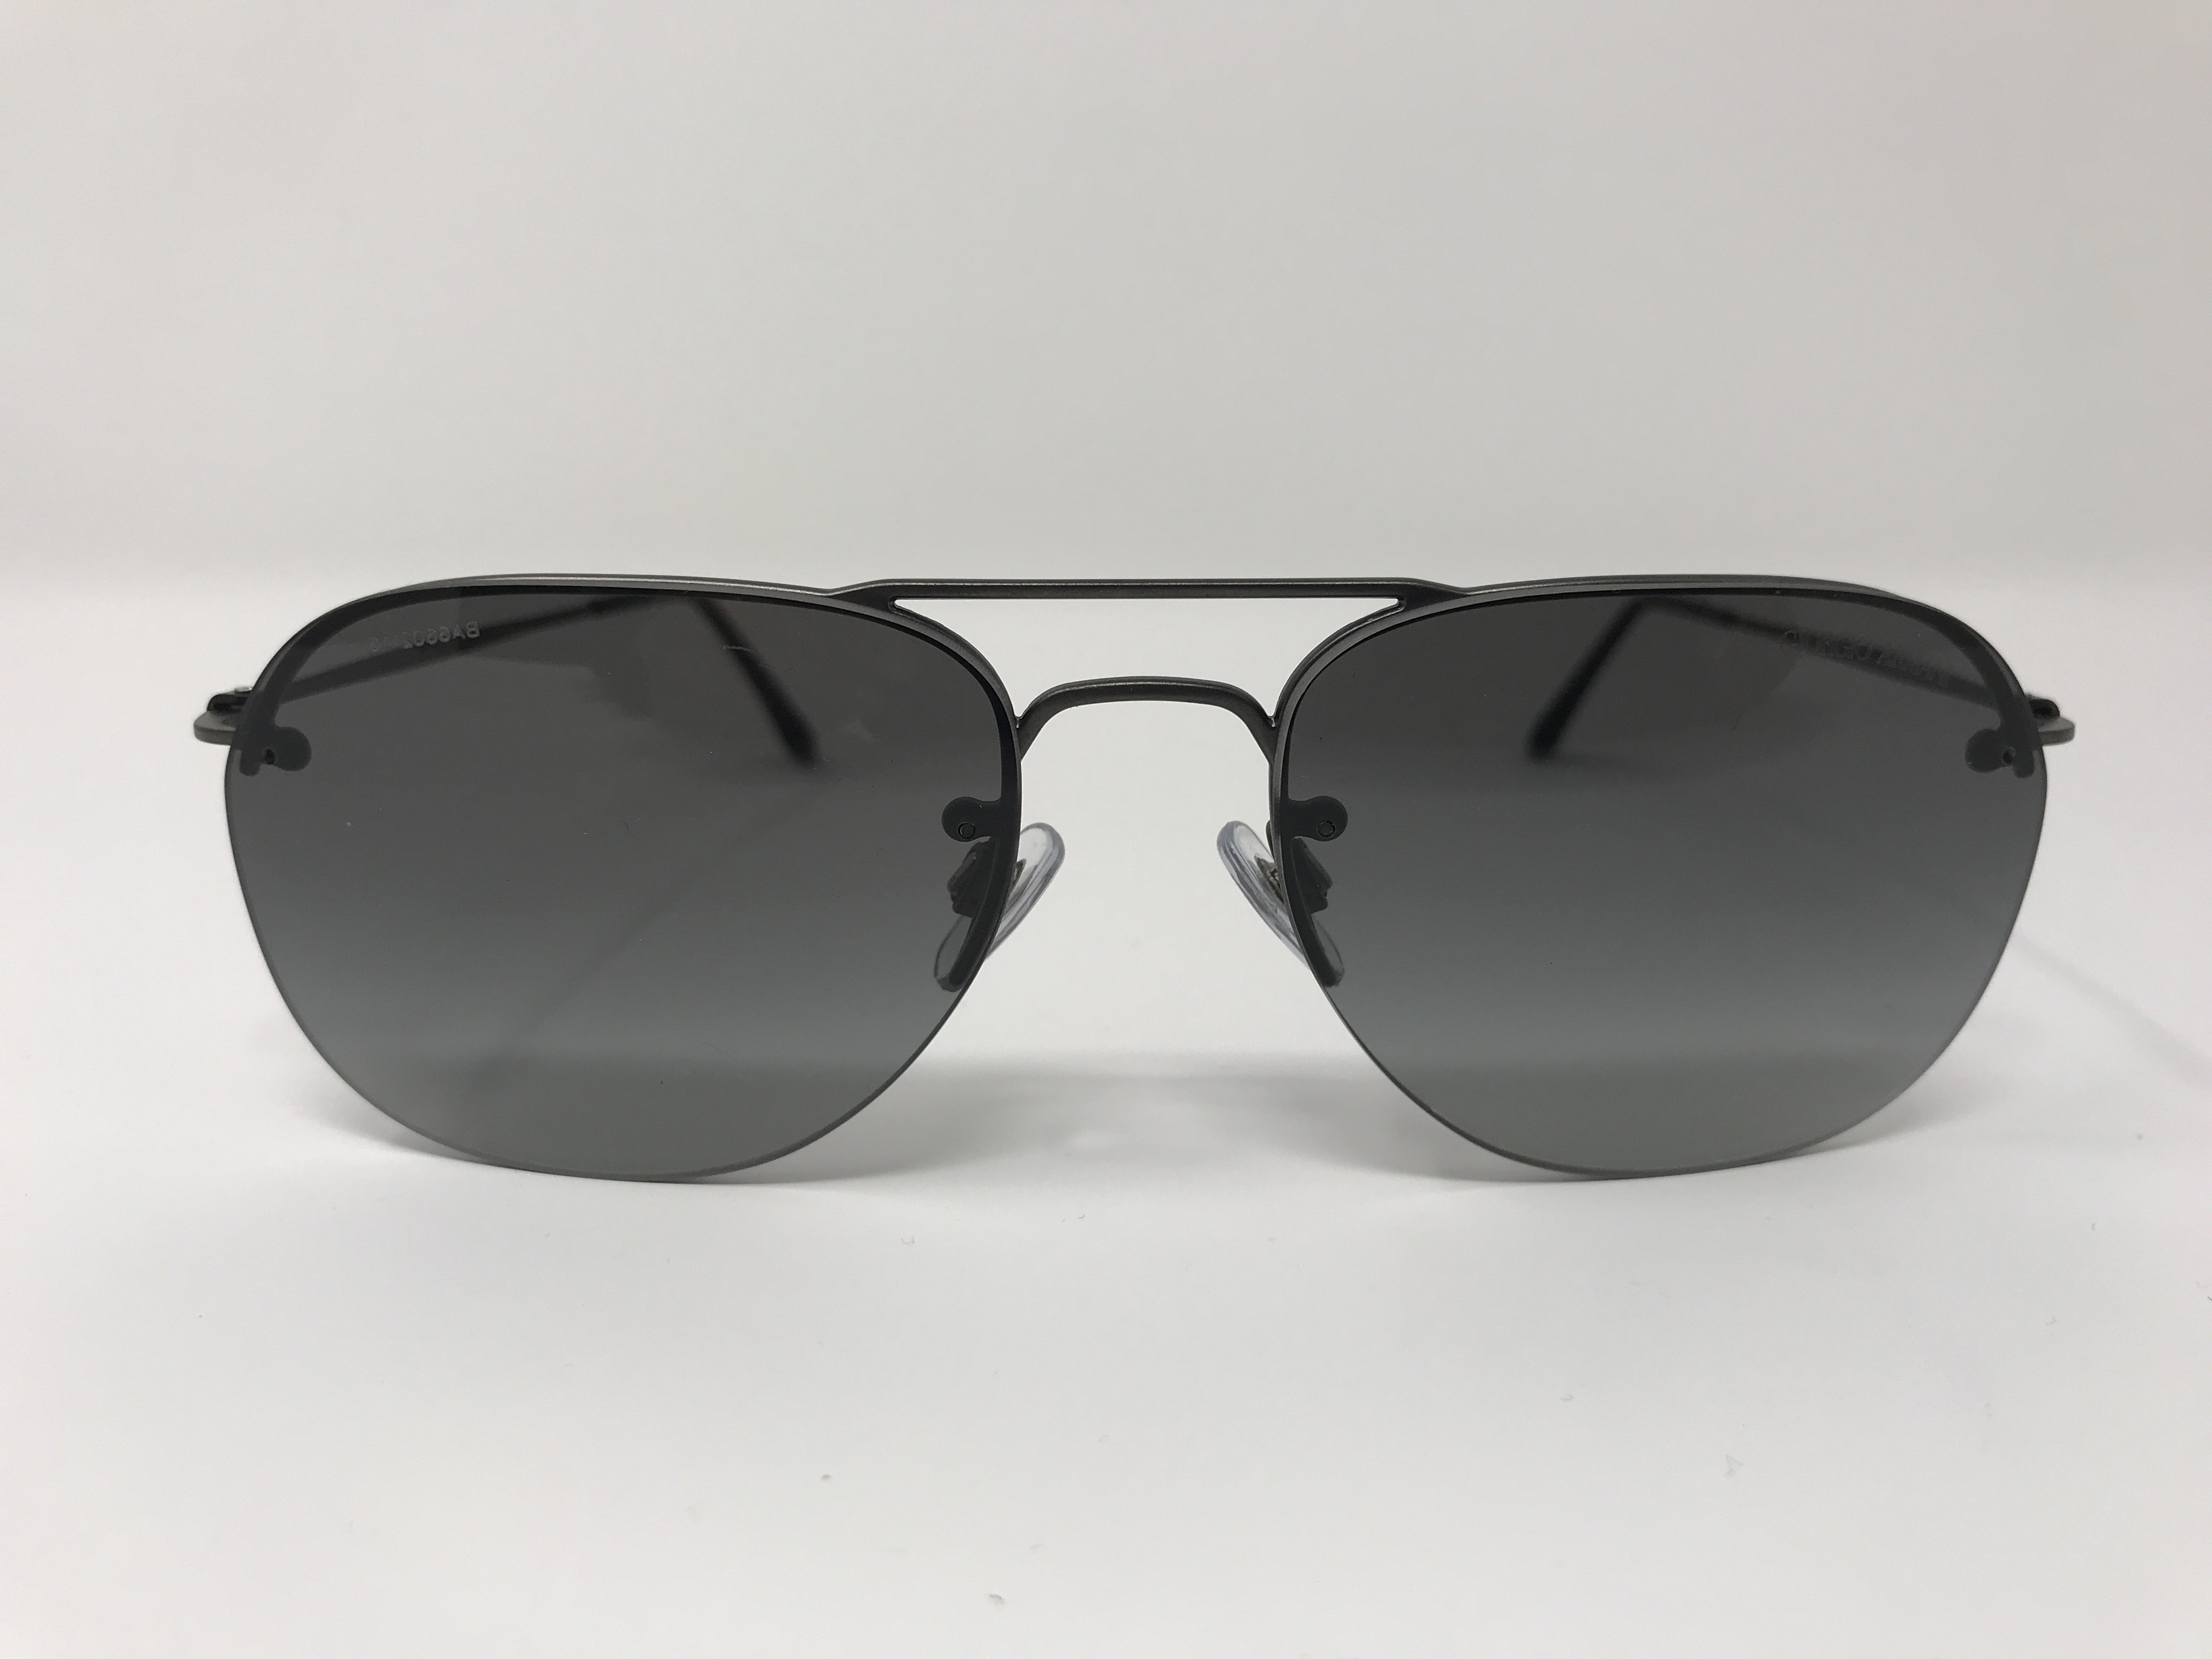 Emporio Armani EA1105 Unisex Polarized BIFOCAL Sunglasses in Navy Blue Red  56 mm - Polarized World